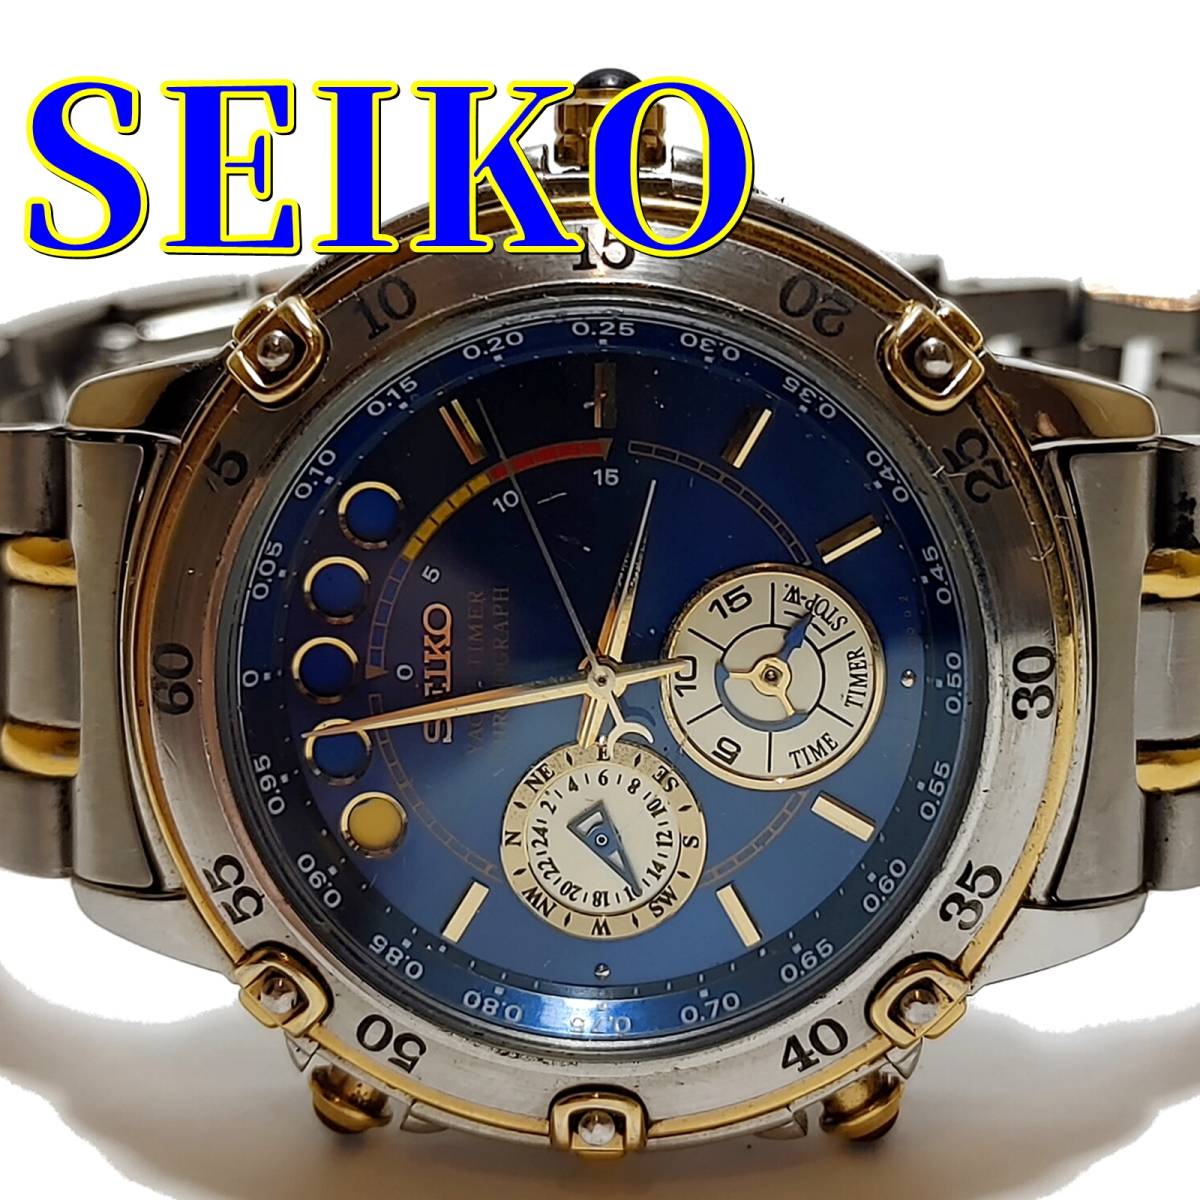 SEIKO YACHT TIMER ヨットタイマー 腕時計 8M37-6000 - メンズ